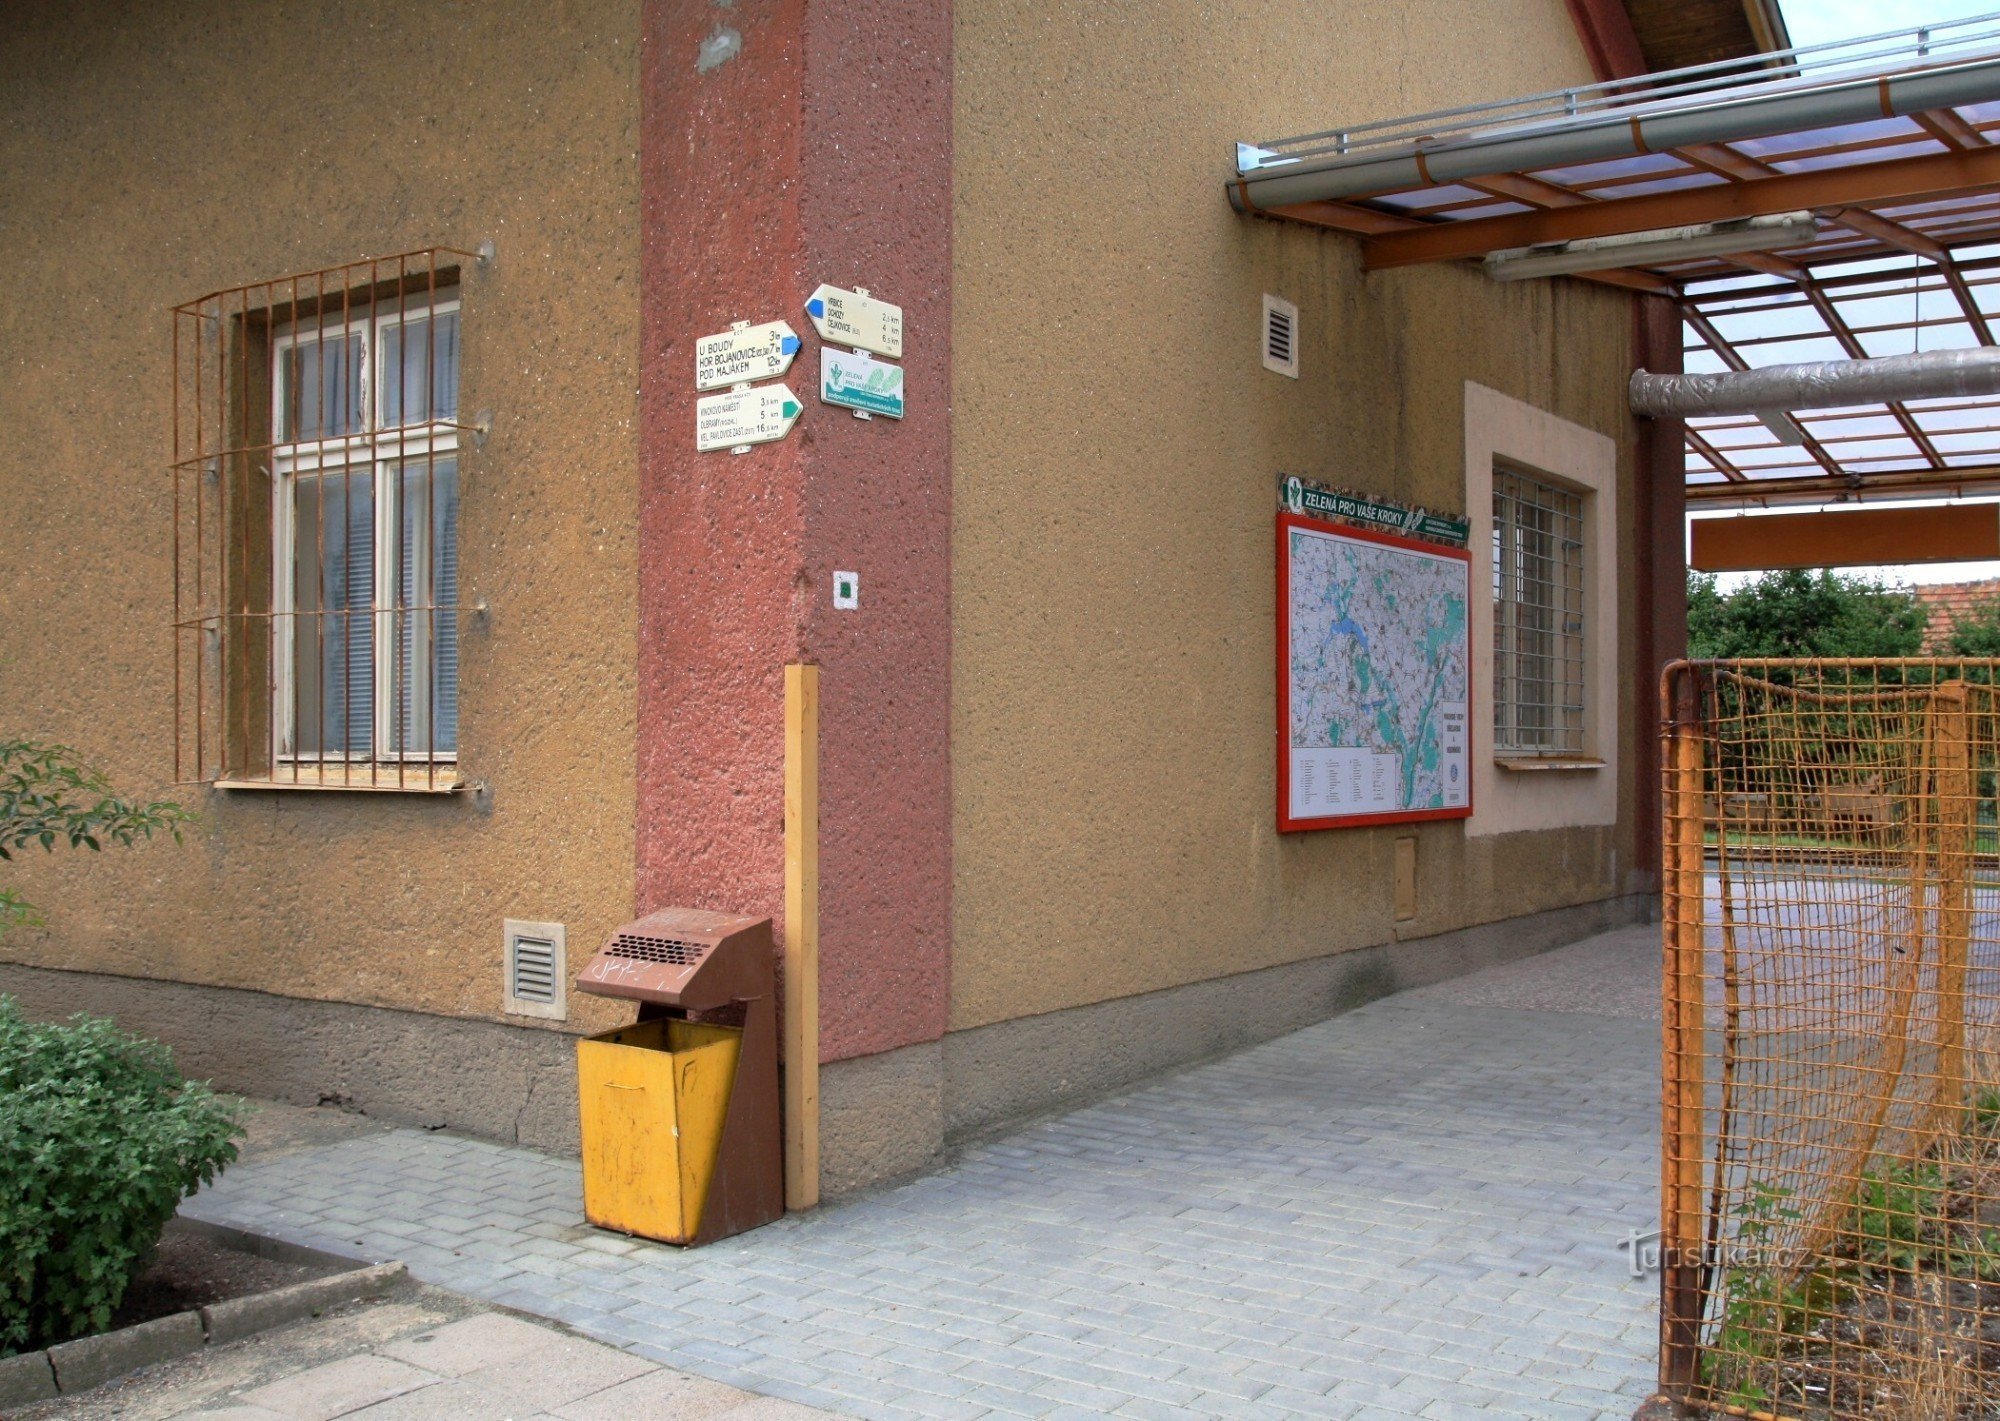 Kobylí railway station tourist crossroads